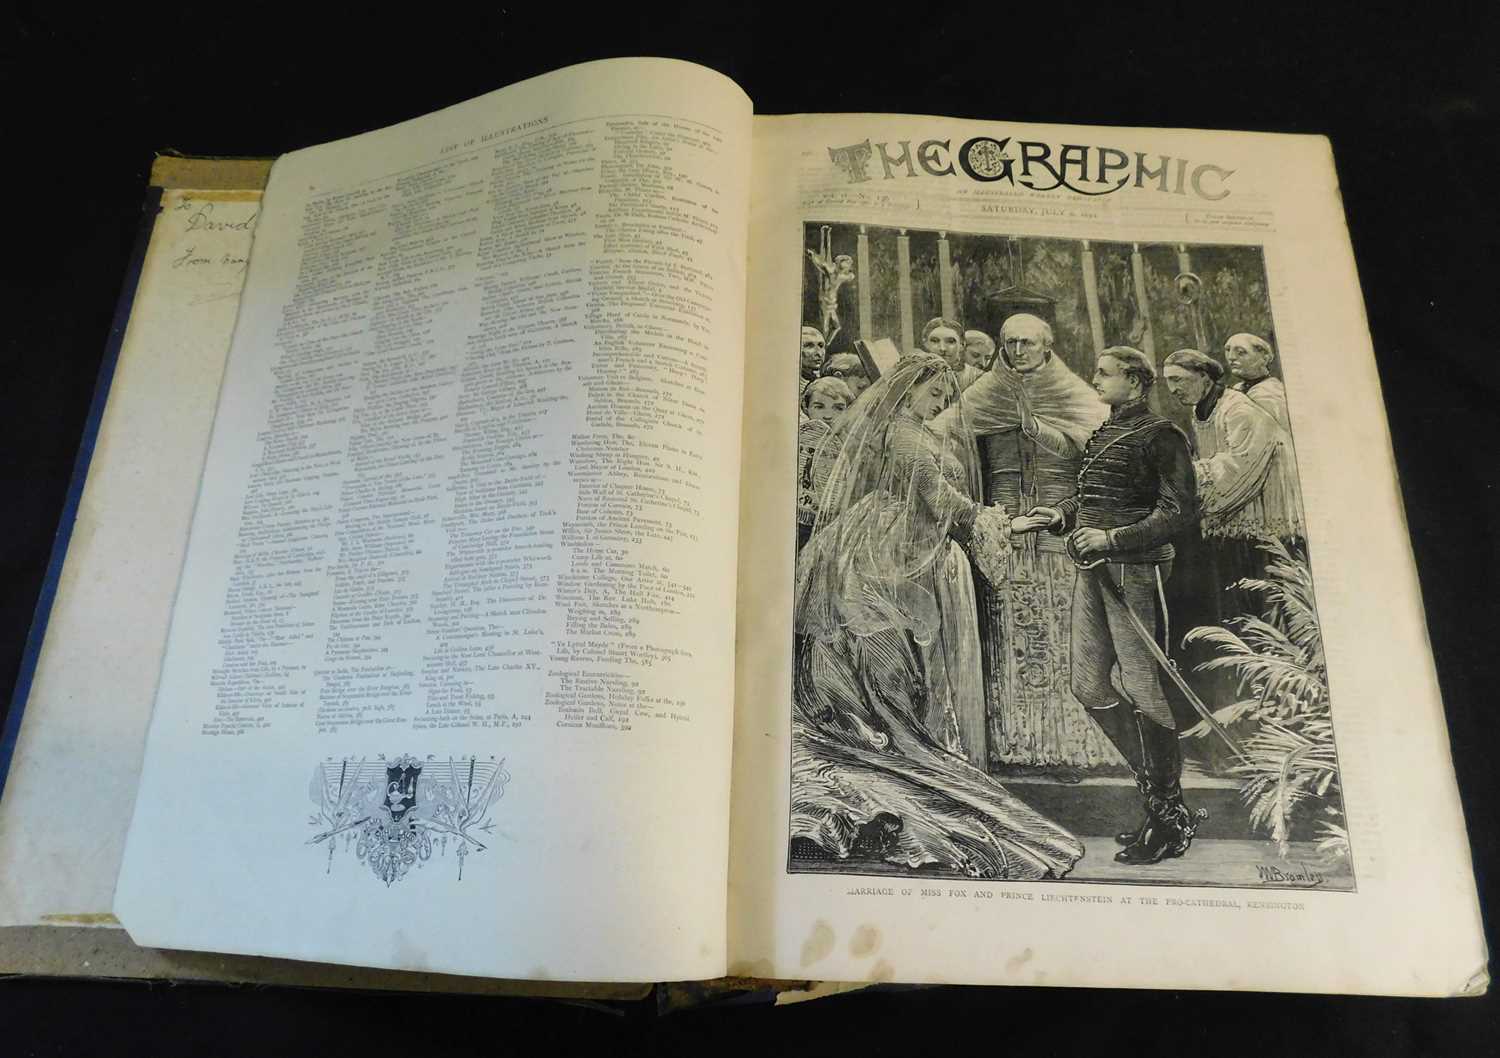 THE GRAPHIC, 1872, vol 16, fo, original cloth gilt worn, lacks backstrip, contents appear complete